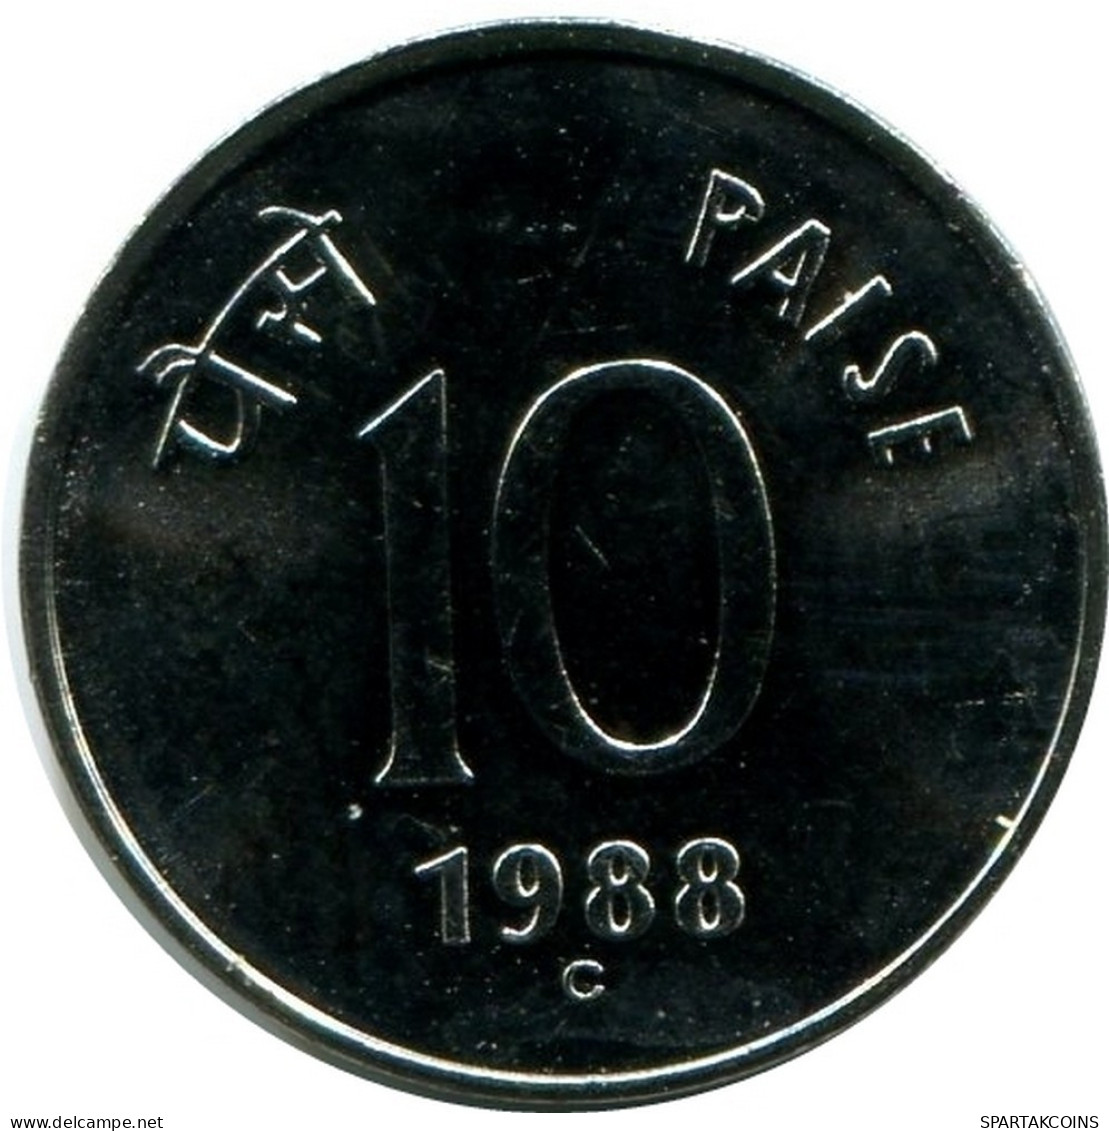 10 PAISE 1988 INDIA UNC Coin #M10105.U.A - India